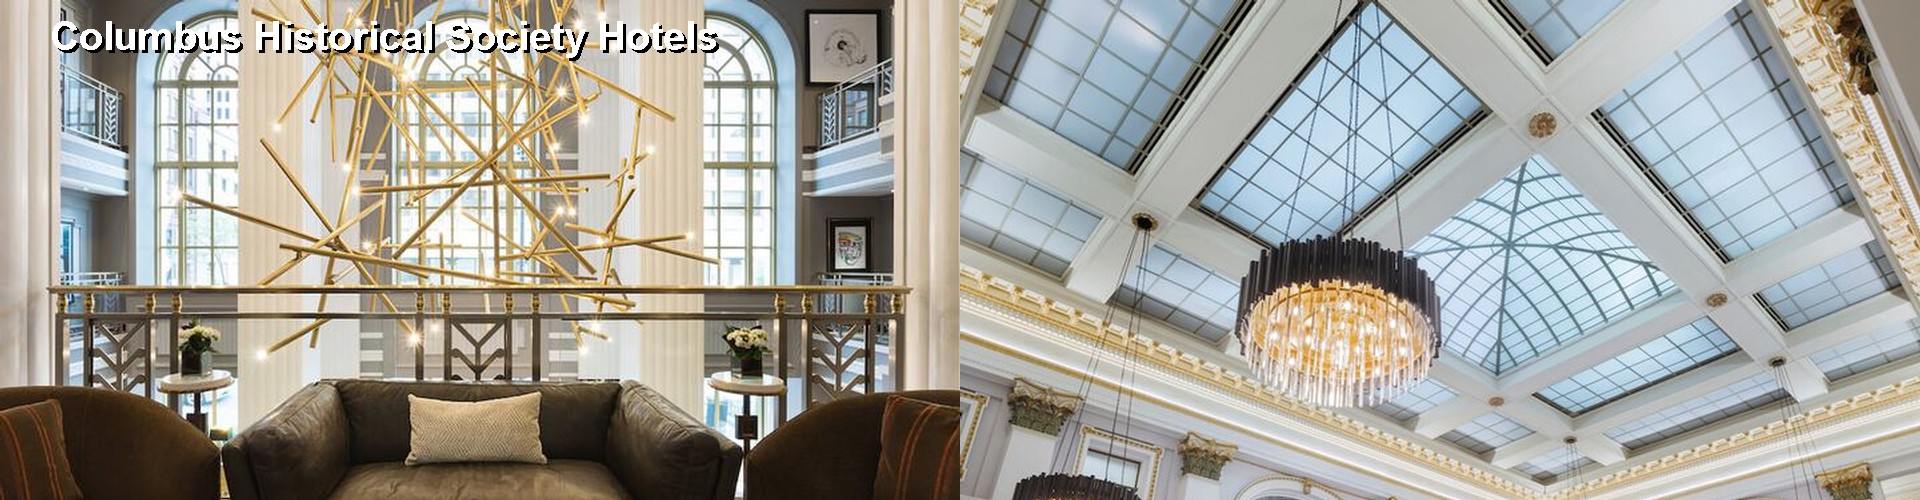 5 Best Hotels near Columbus Historical Society